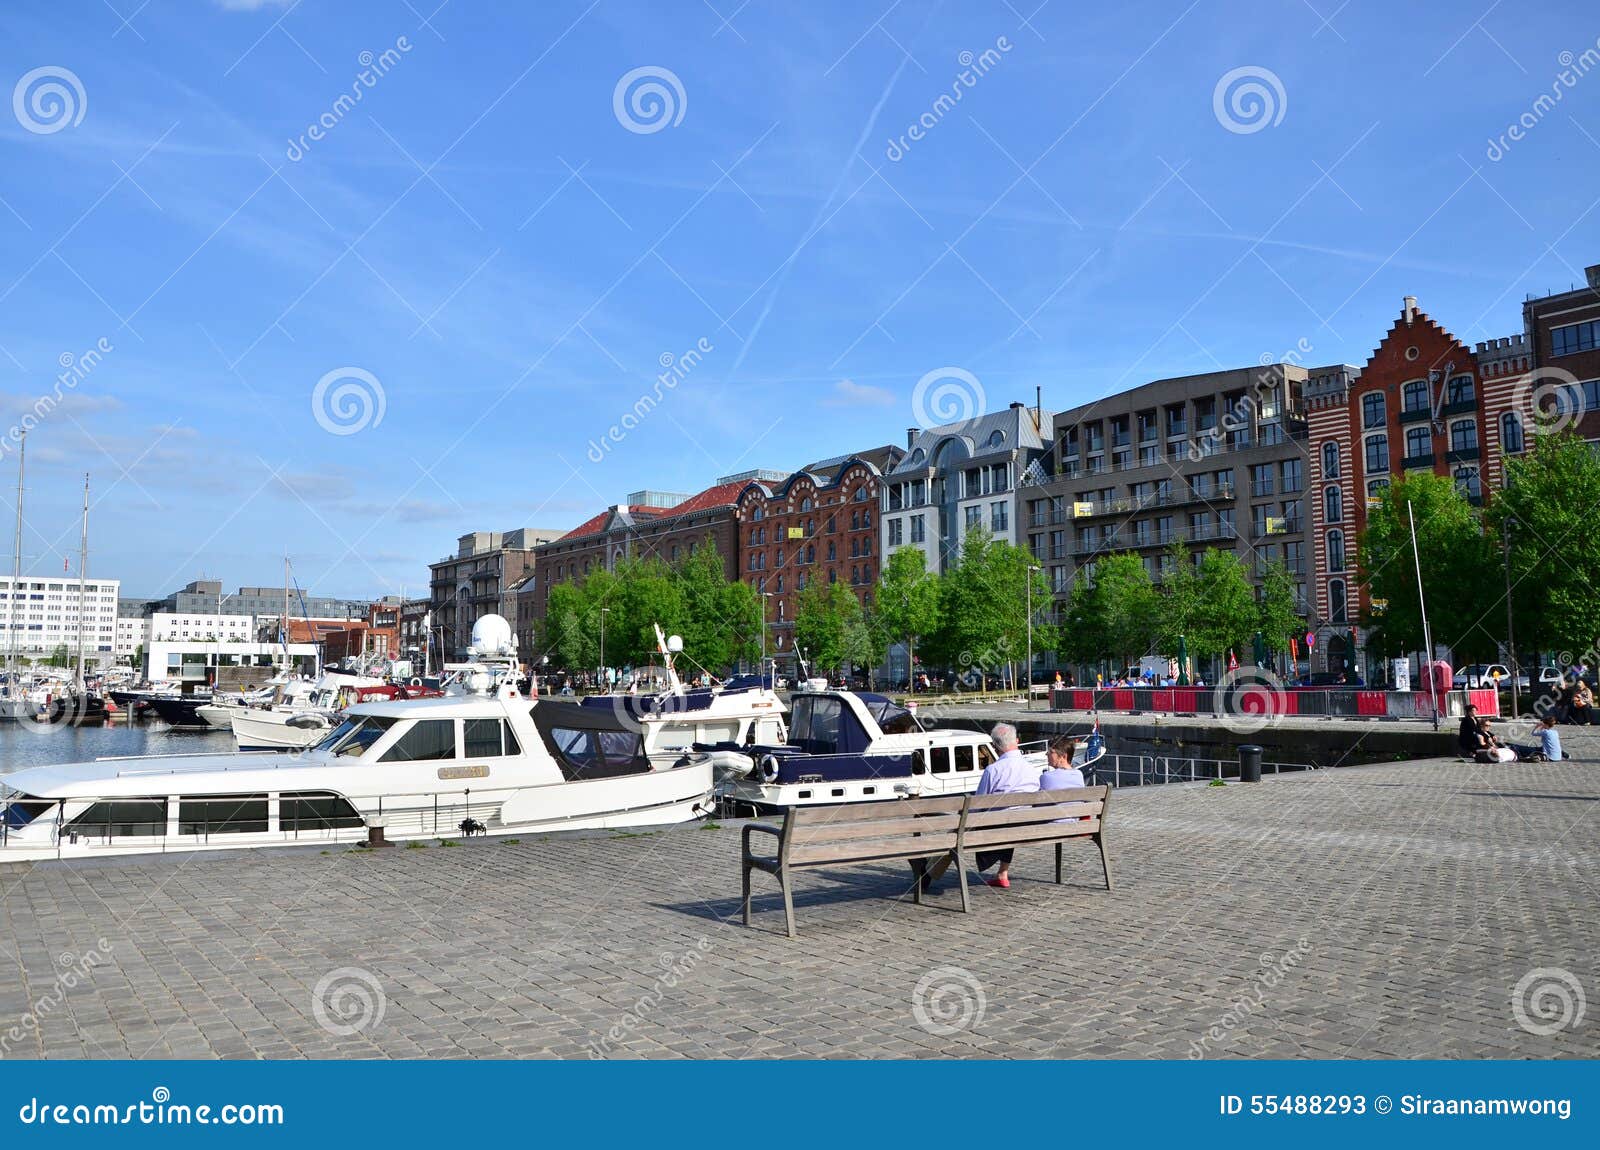 Antwerpen, Belgien - 10. Mai 2015: Yachten festgemacht in Willem Dock in Antwerpen. Antwerpen, Belgien - 10. Mai 2015: Yachten machten in Willem Dock fest, der vom Museum aan de Stroom in Antwerpen, Belgien dargestellt wurde